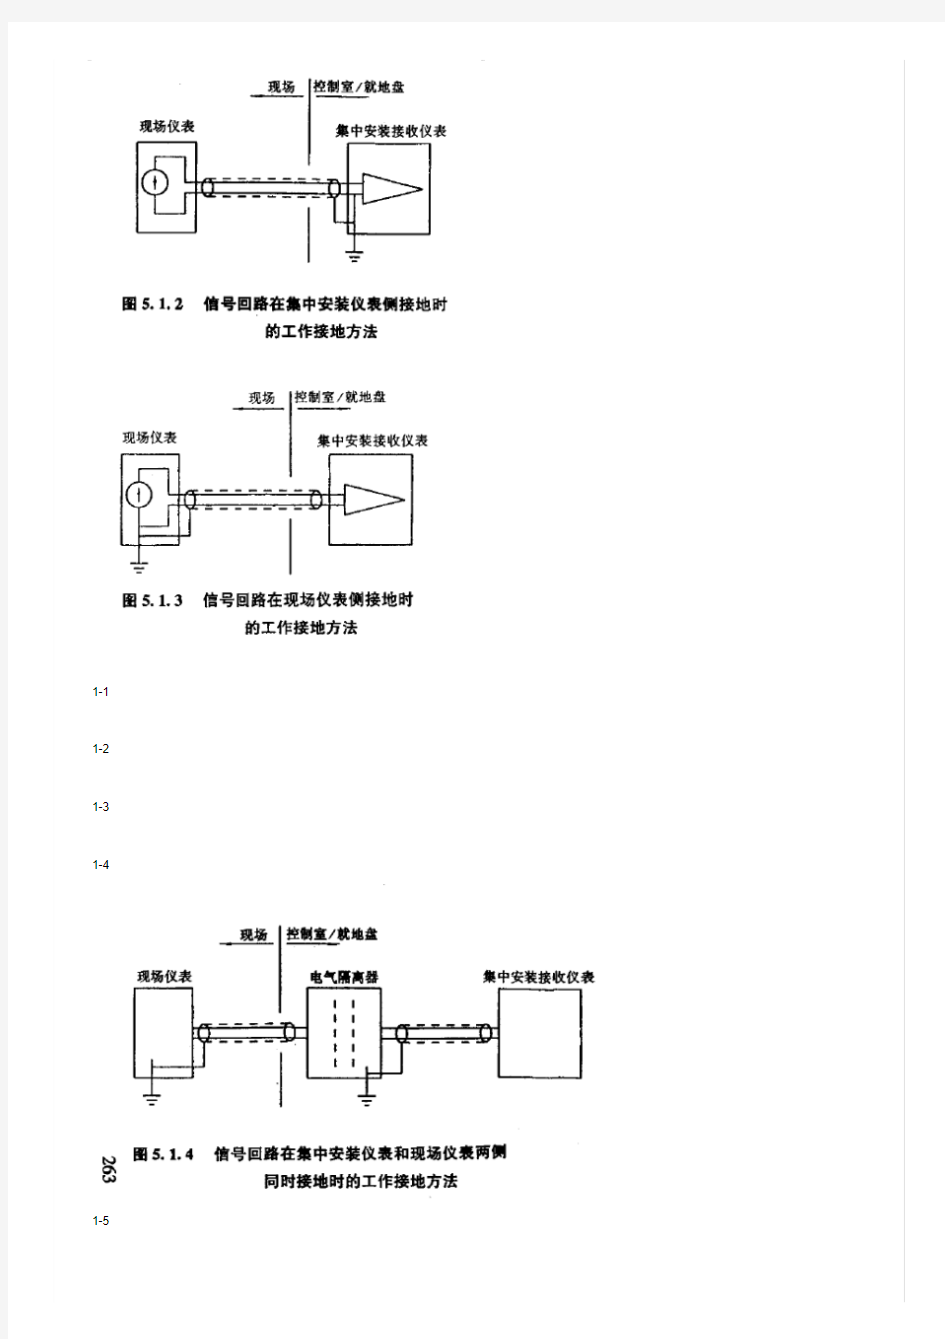 HG_T20513-2000仪表系统接地设计规定-